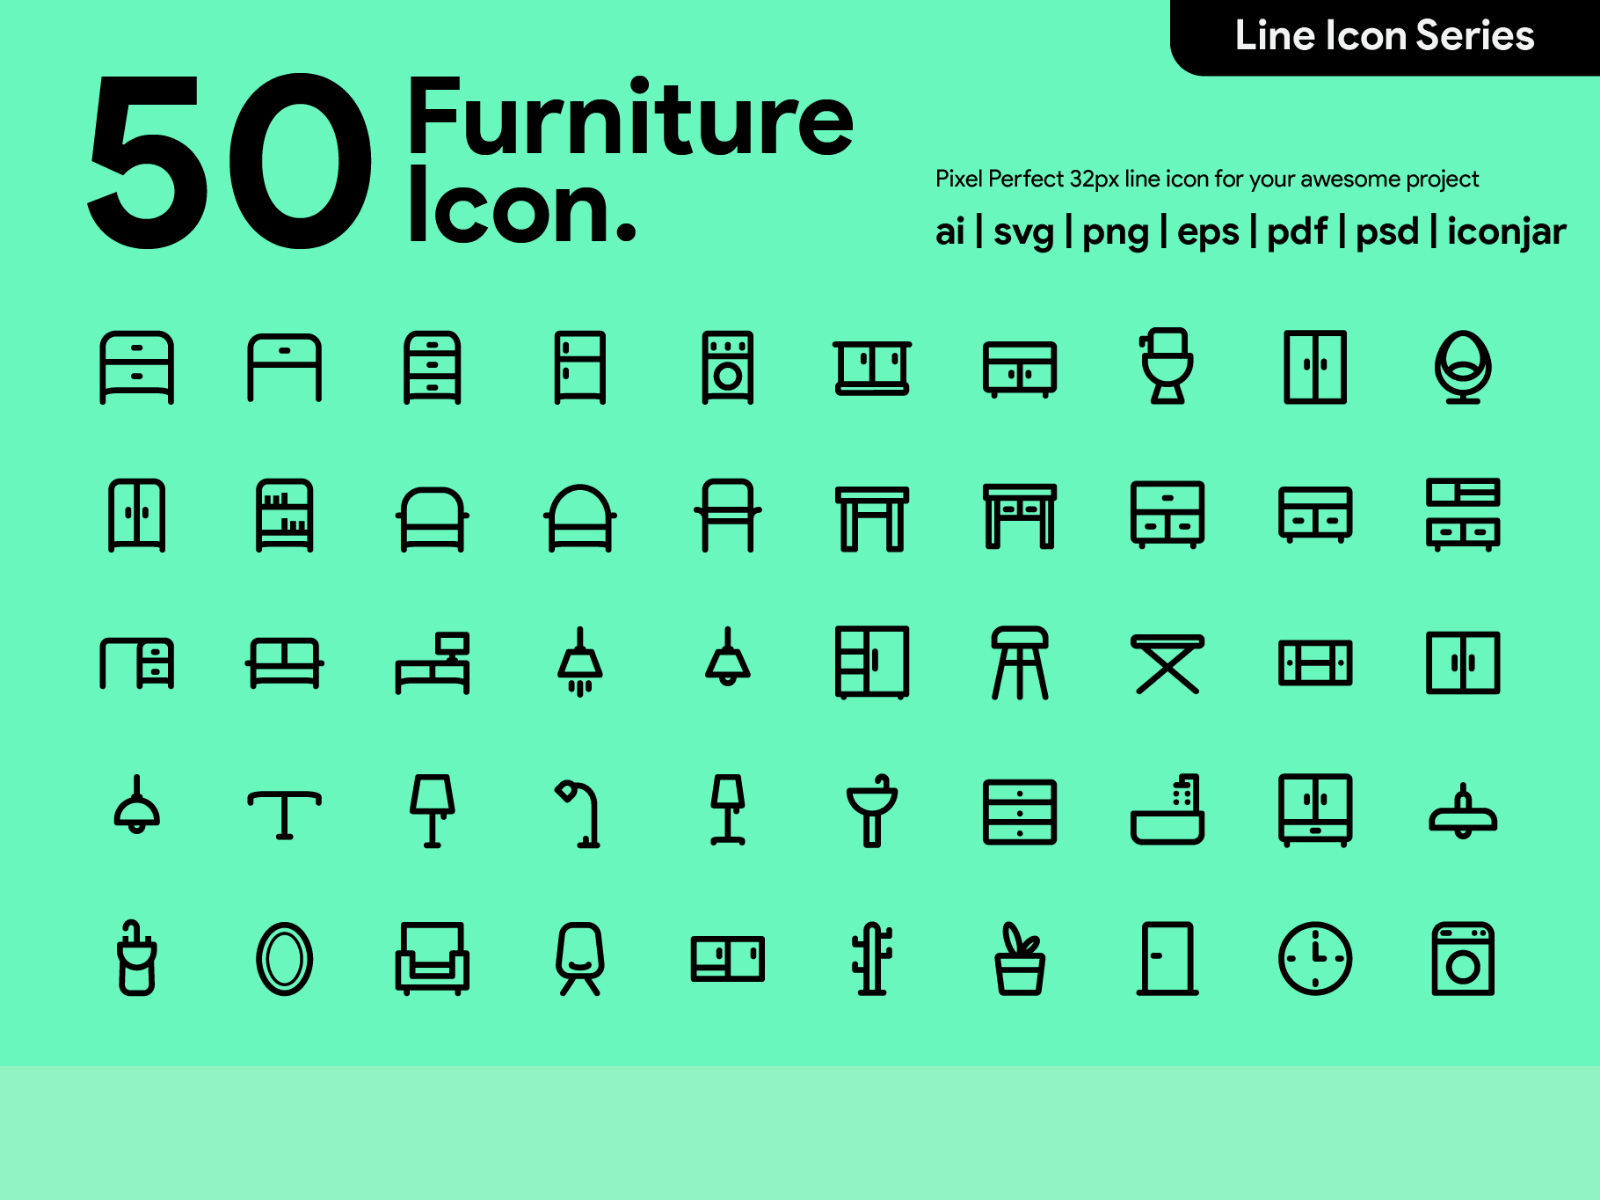 App icons design idea #243: Kawaicon - 50 Furniture Line icon